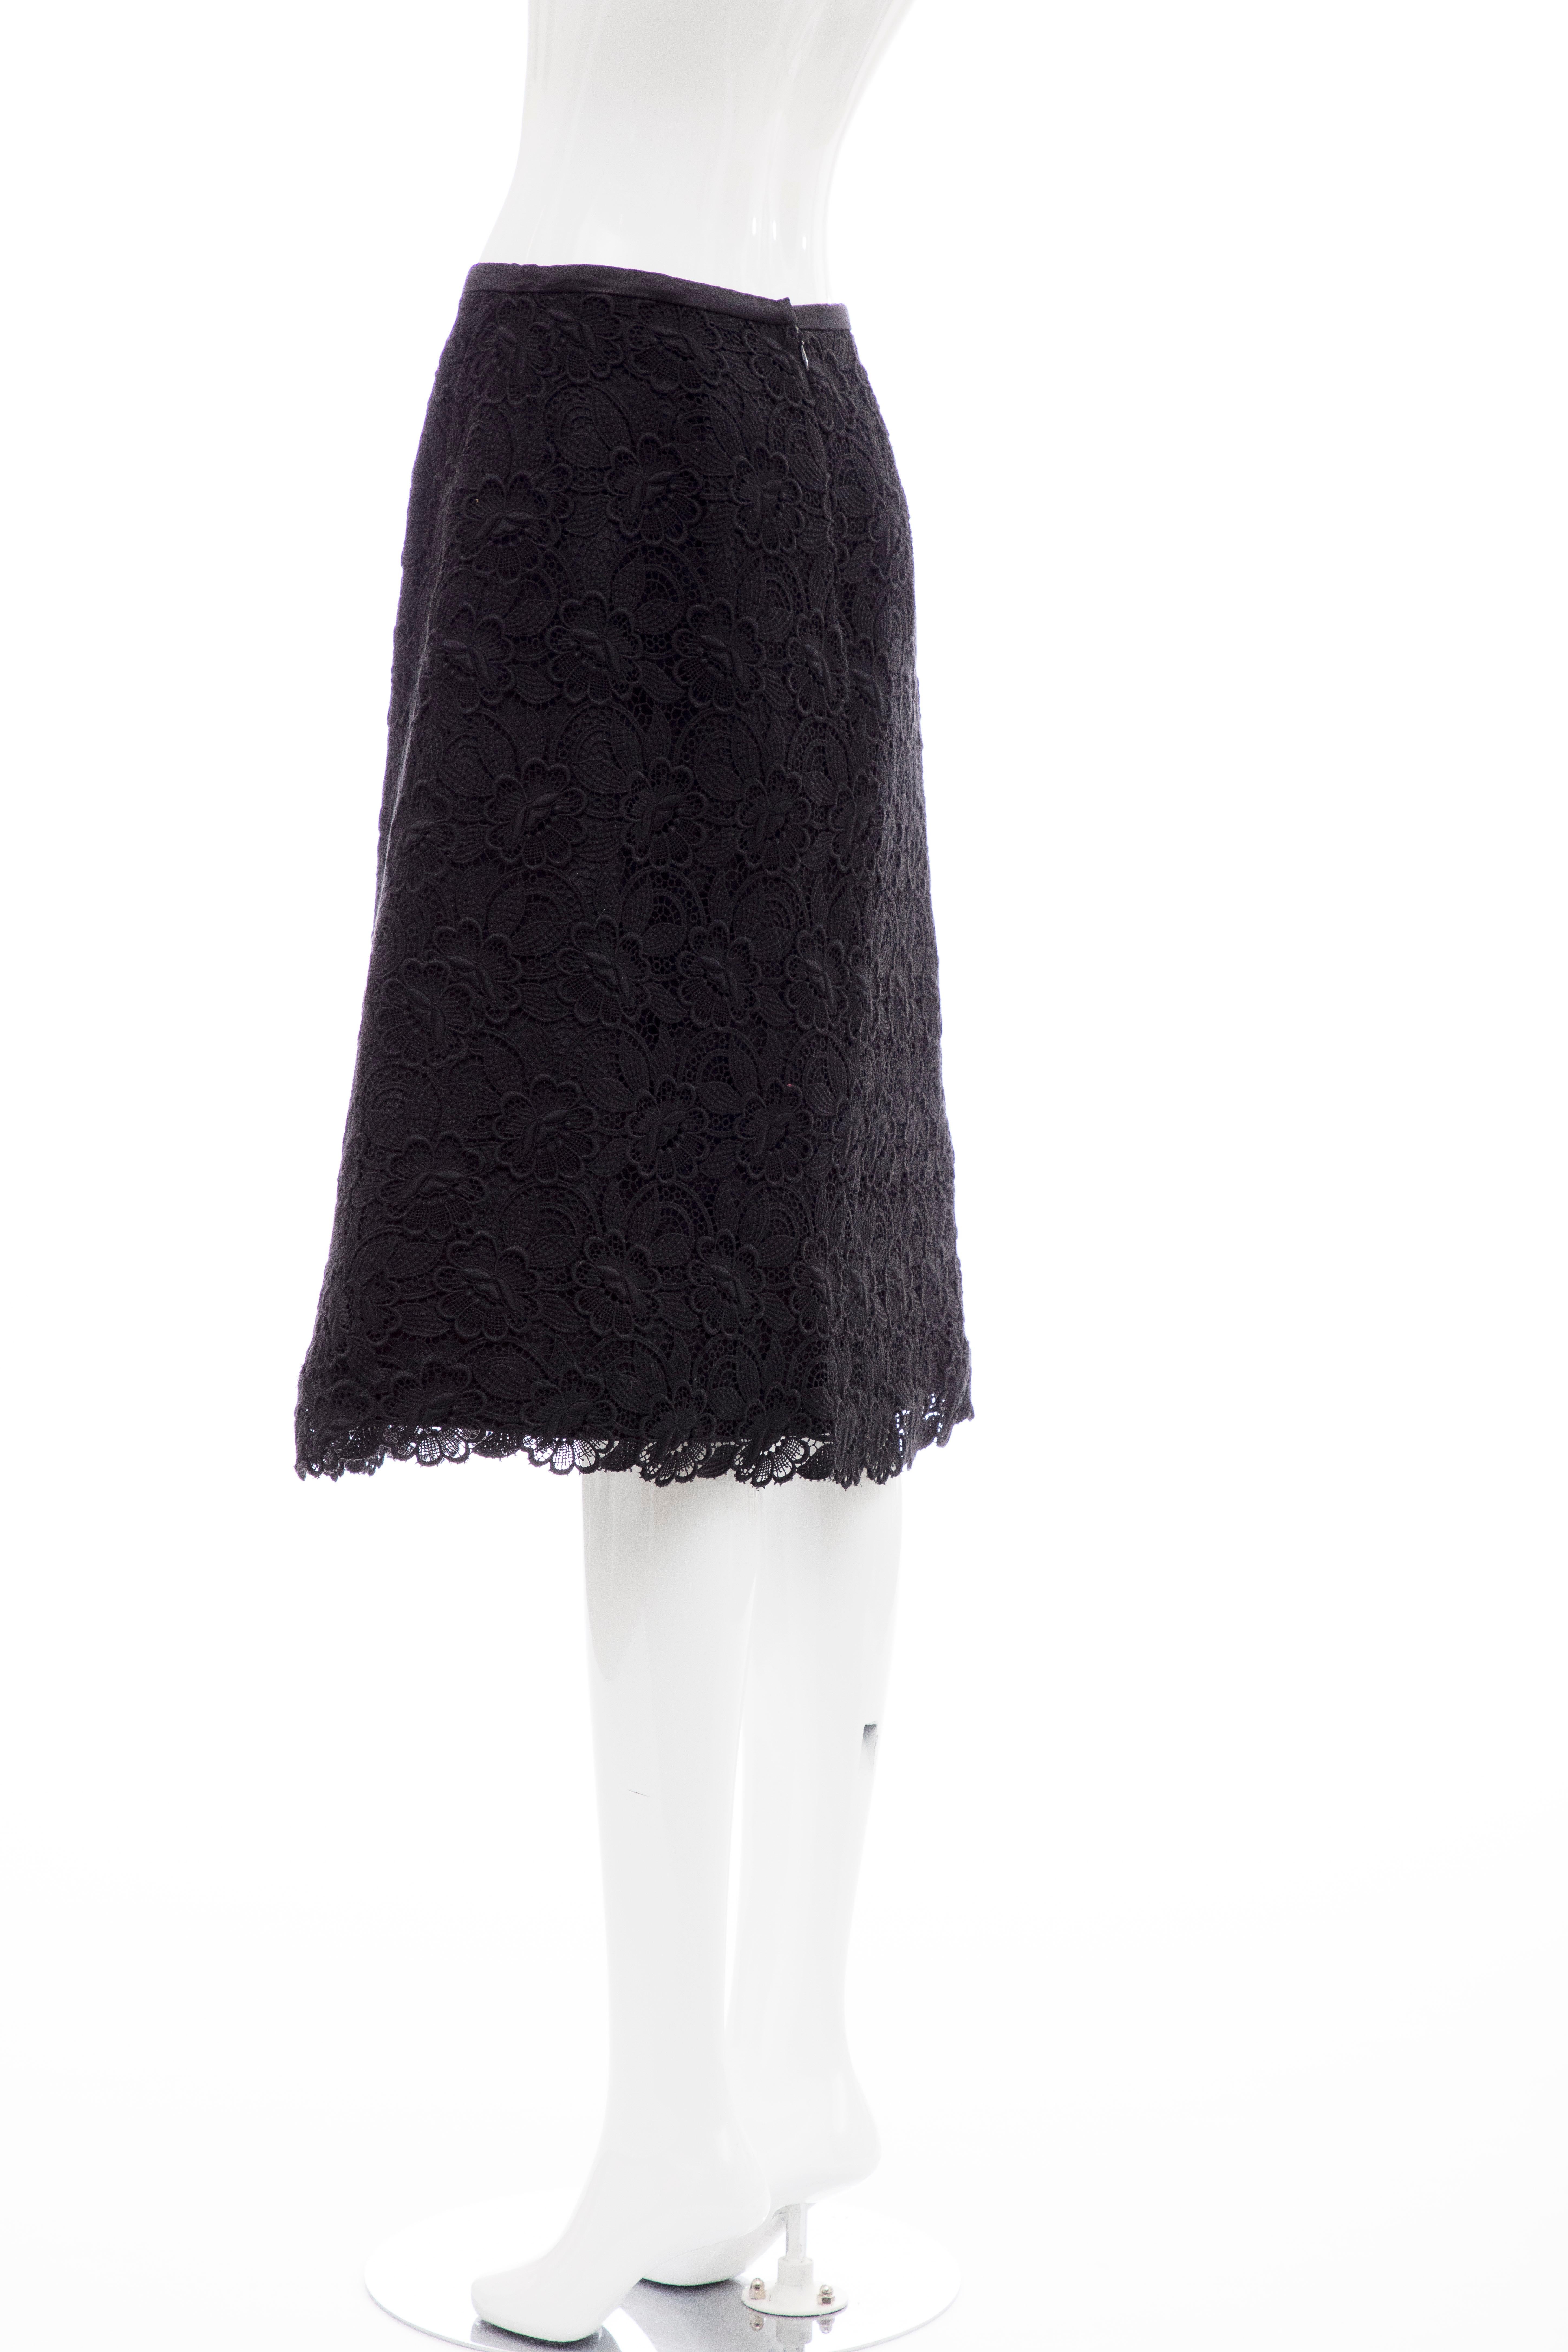 Alexander McQueen Black Silk Cotton Guipure Lace Evening Skirt, Fall 2006 For Sale 7